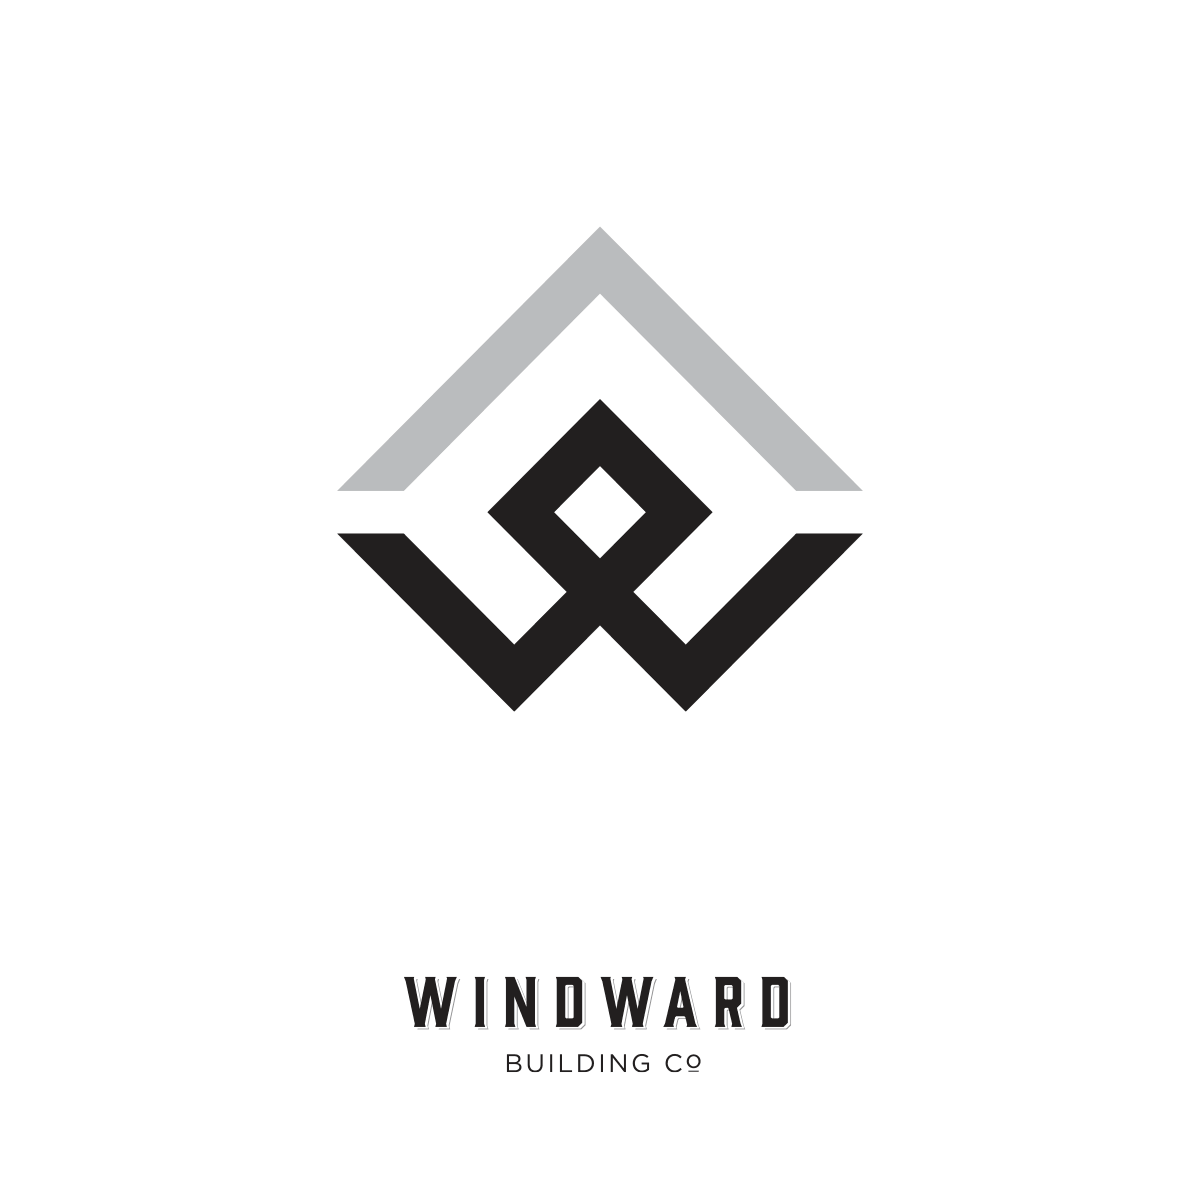 Windward Building Company logo concept v1